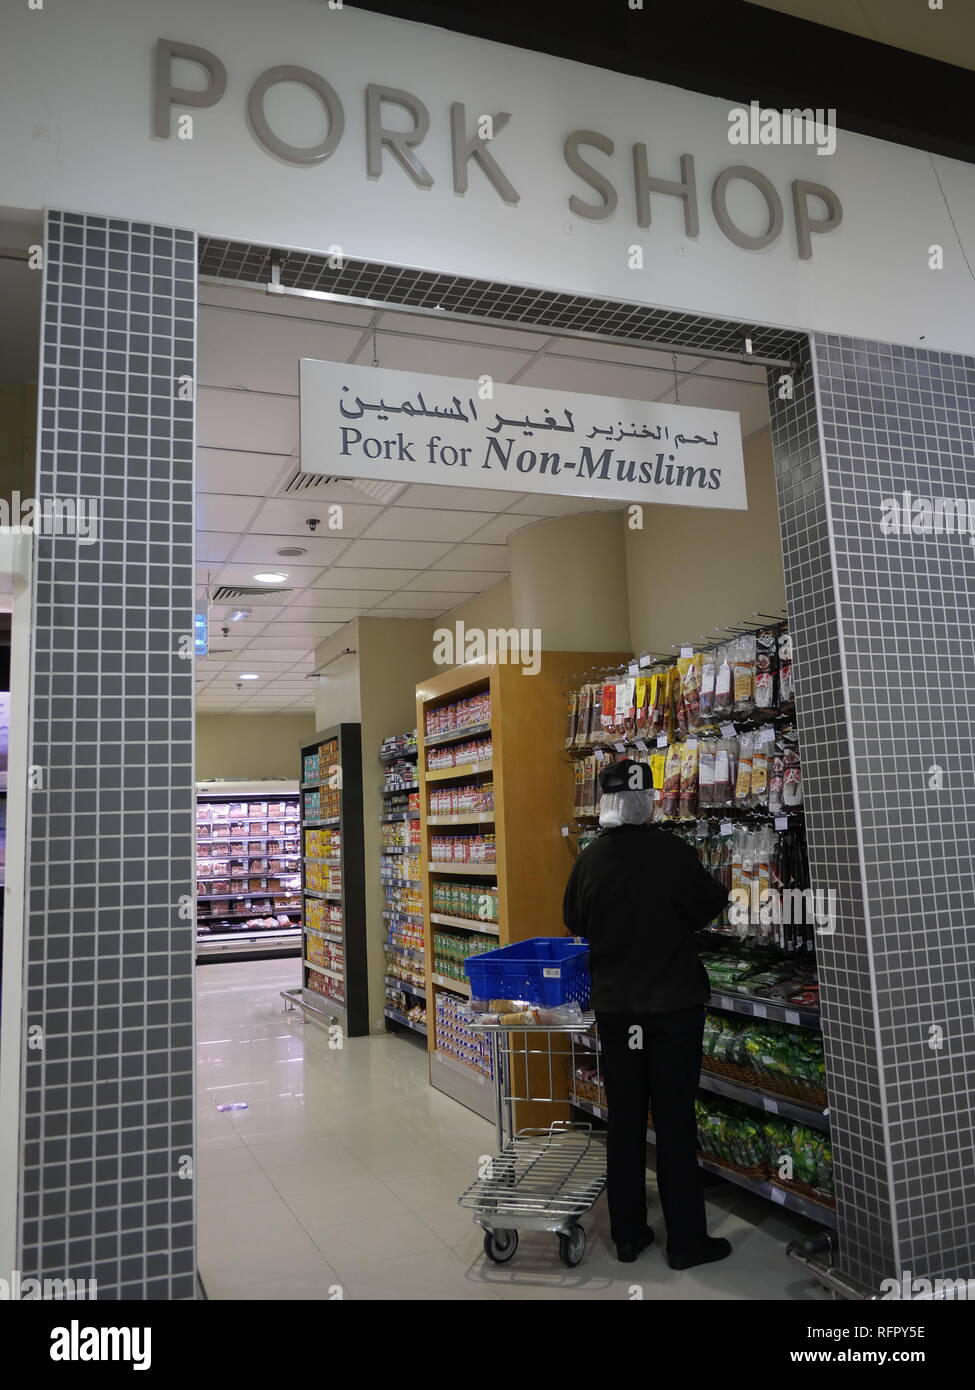 Segregated Pork shop Dubai, for non muslims Stock Photo